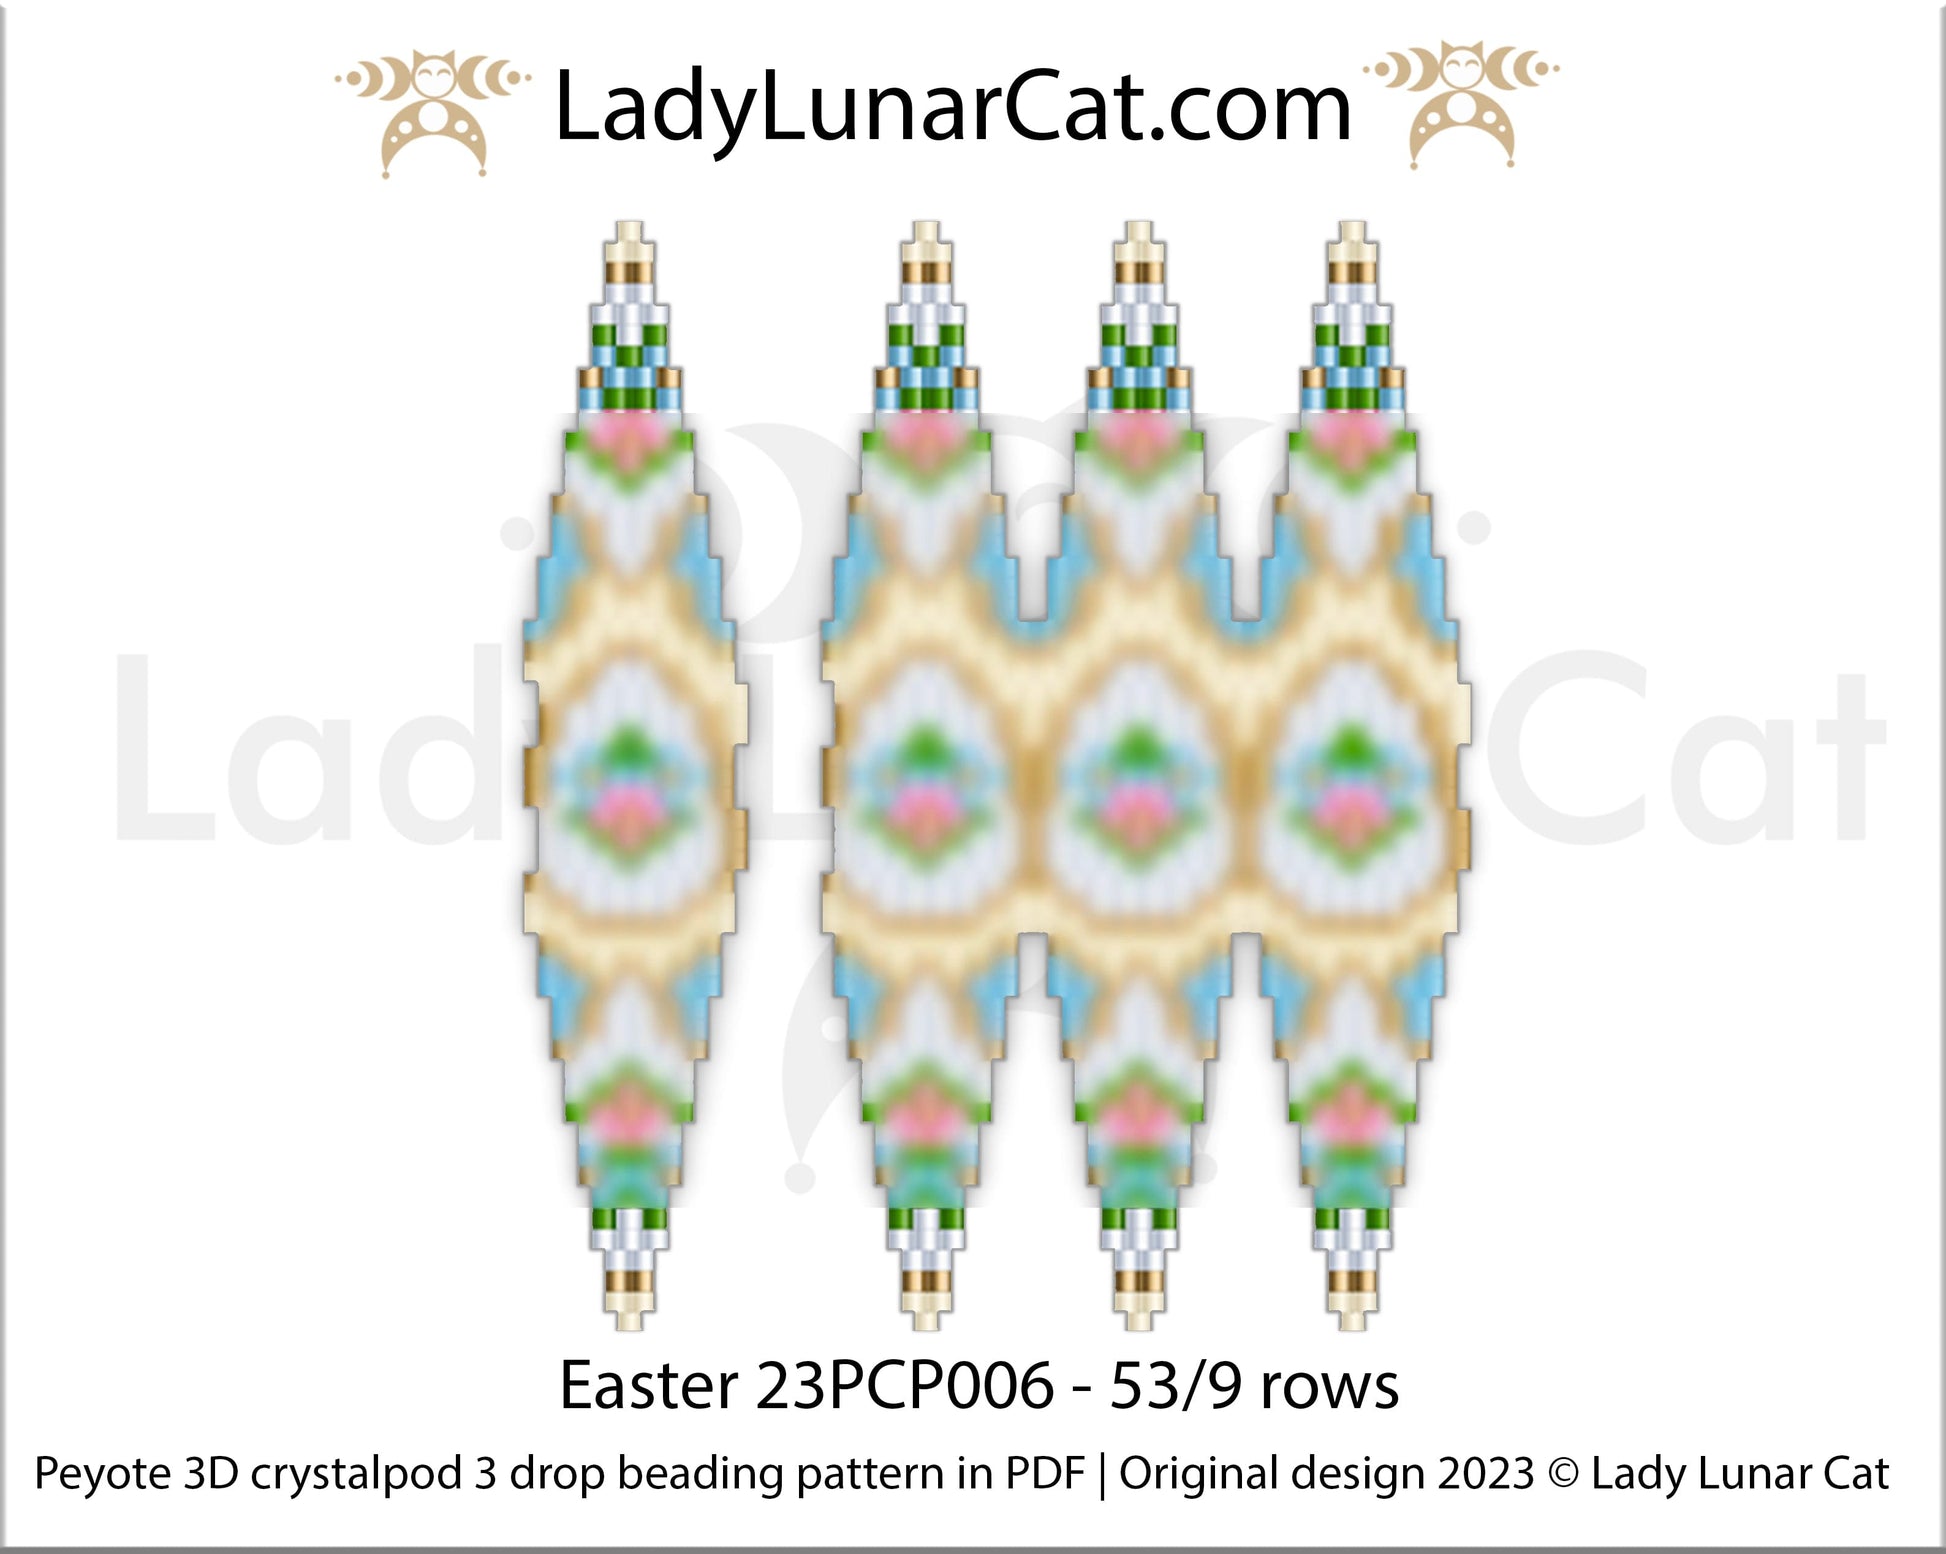 Copy of Peyote 3drop pod pattern or crystalpod pattern for beading Spring 23PCP004 LadyLunarCat